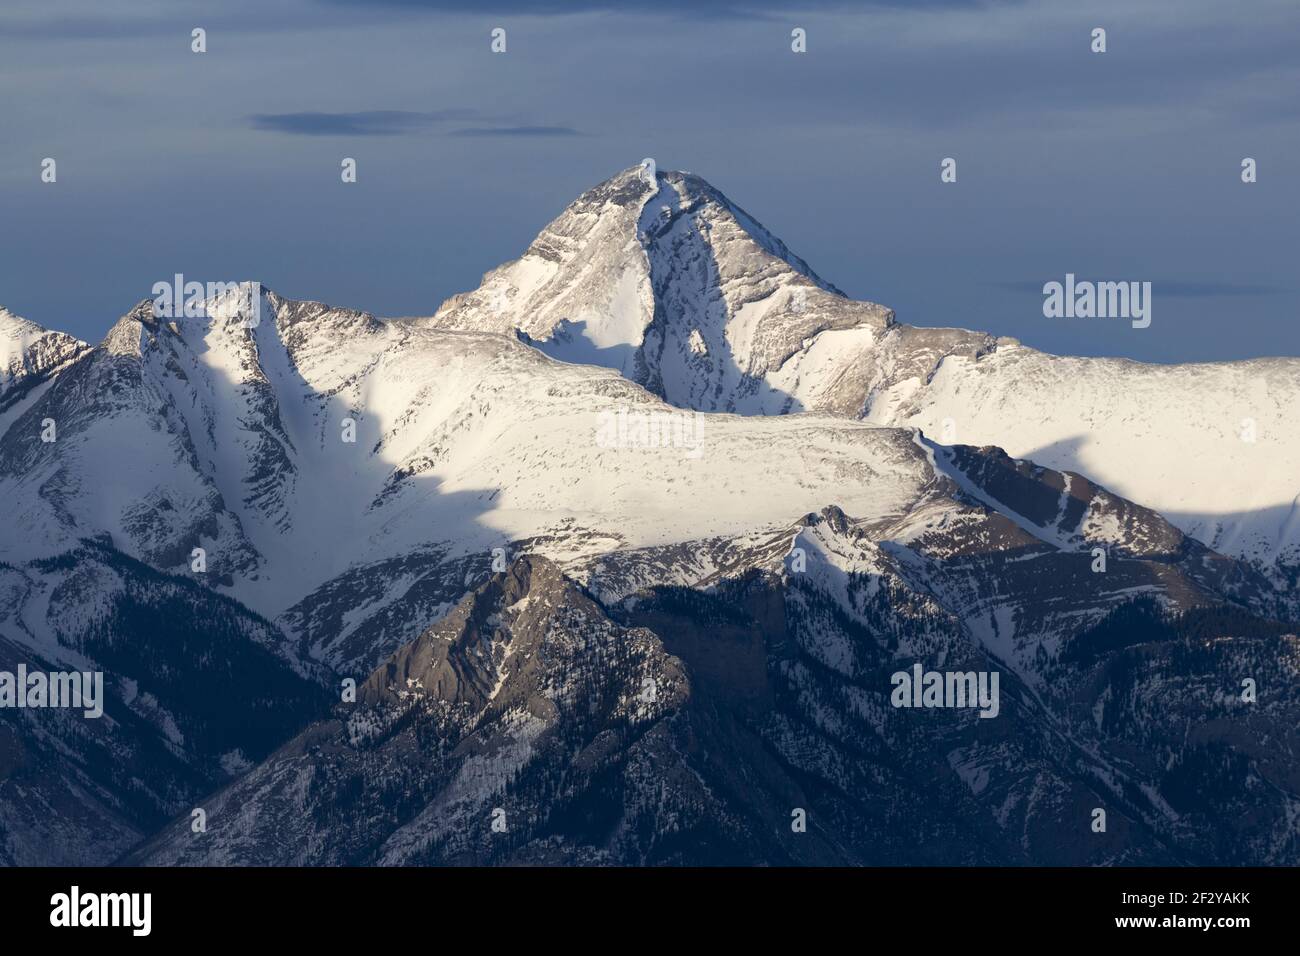 Snowy Mount Aylmer, Highest Mountain Peak in Banff Proximity.  Late Winter Landscape in Canadian Rockies Stock Photo